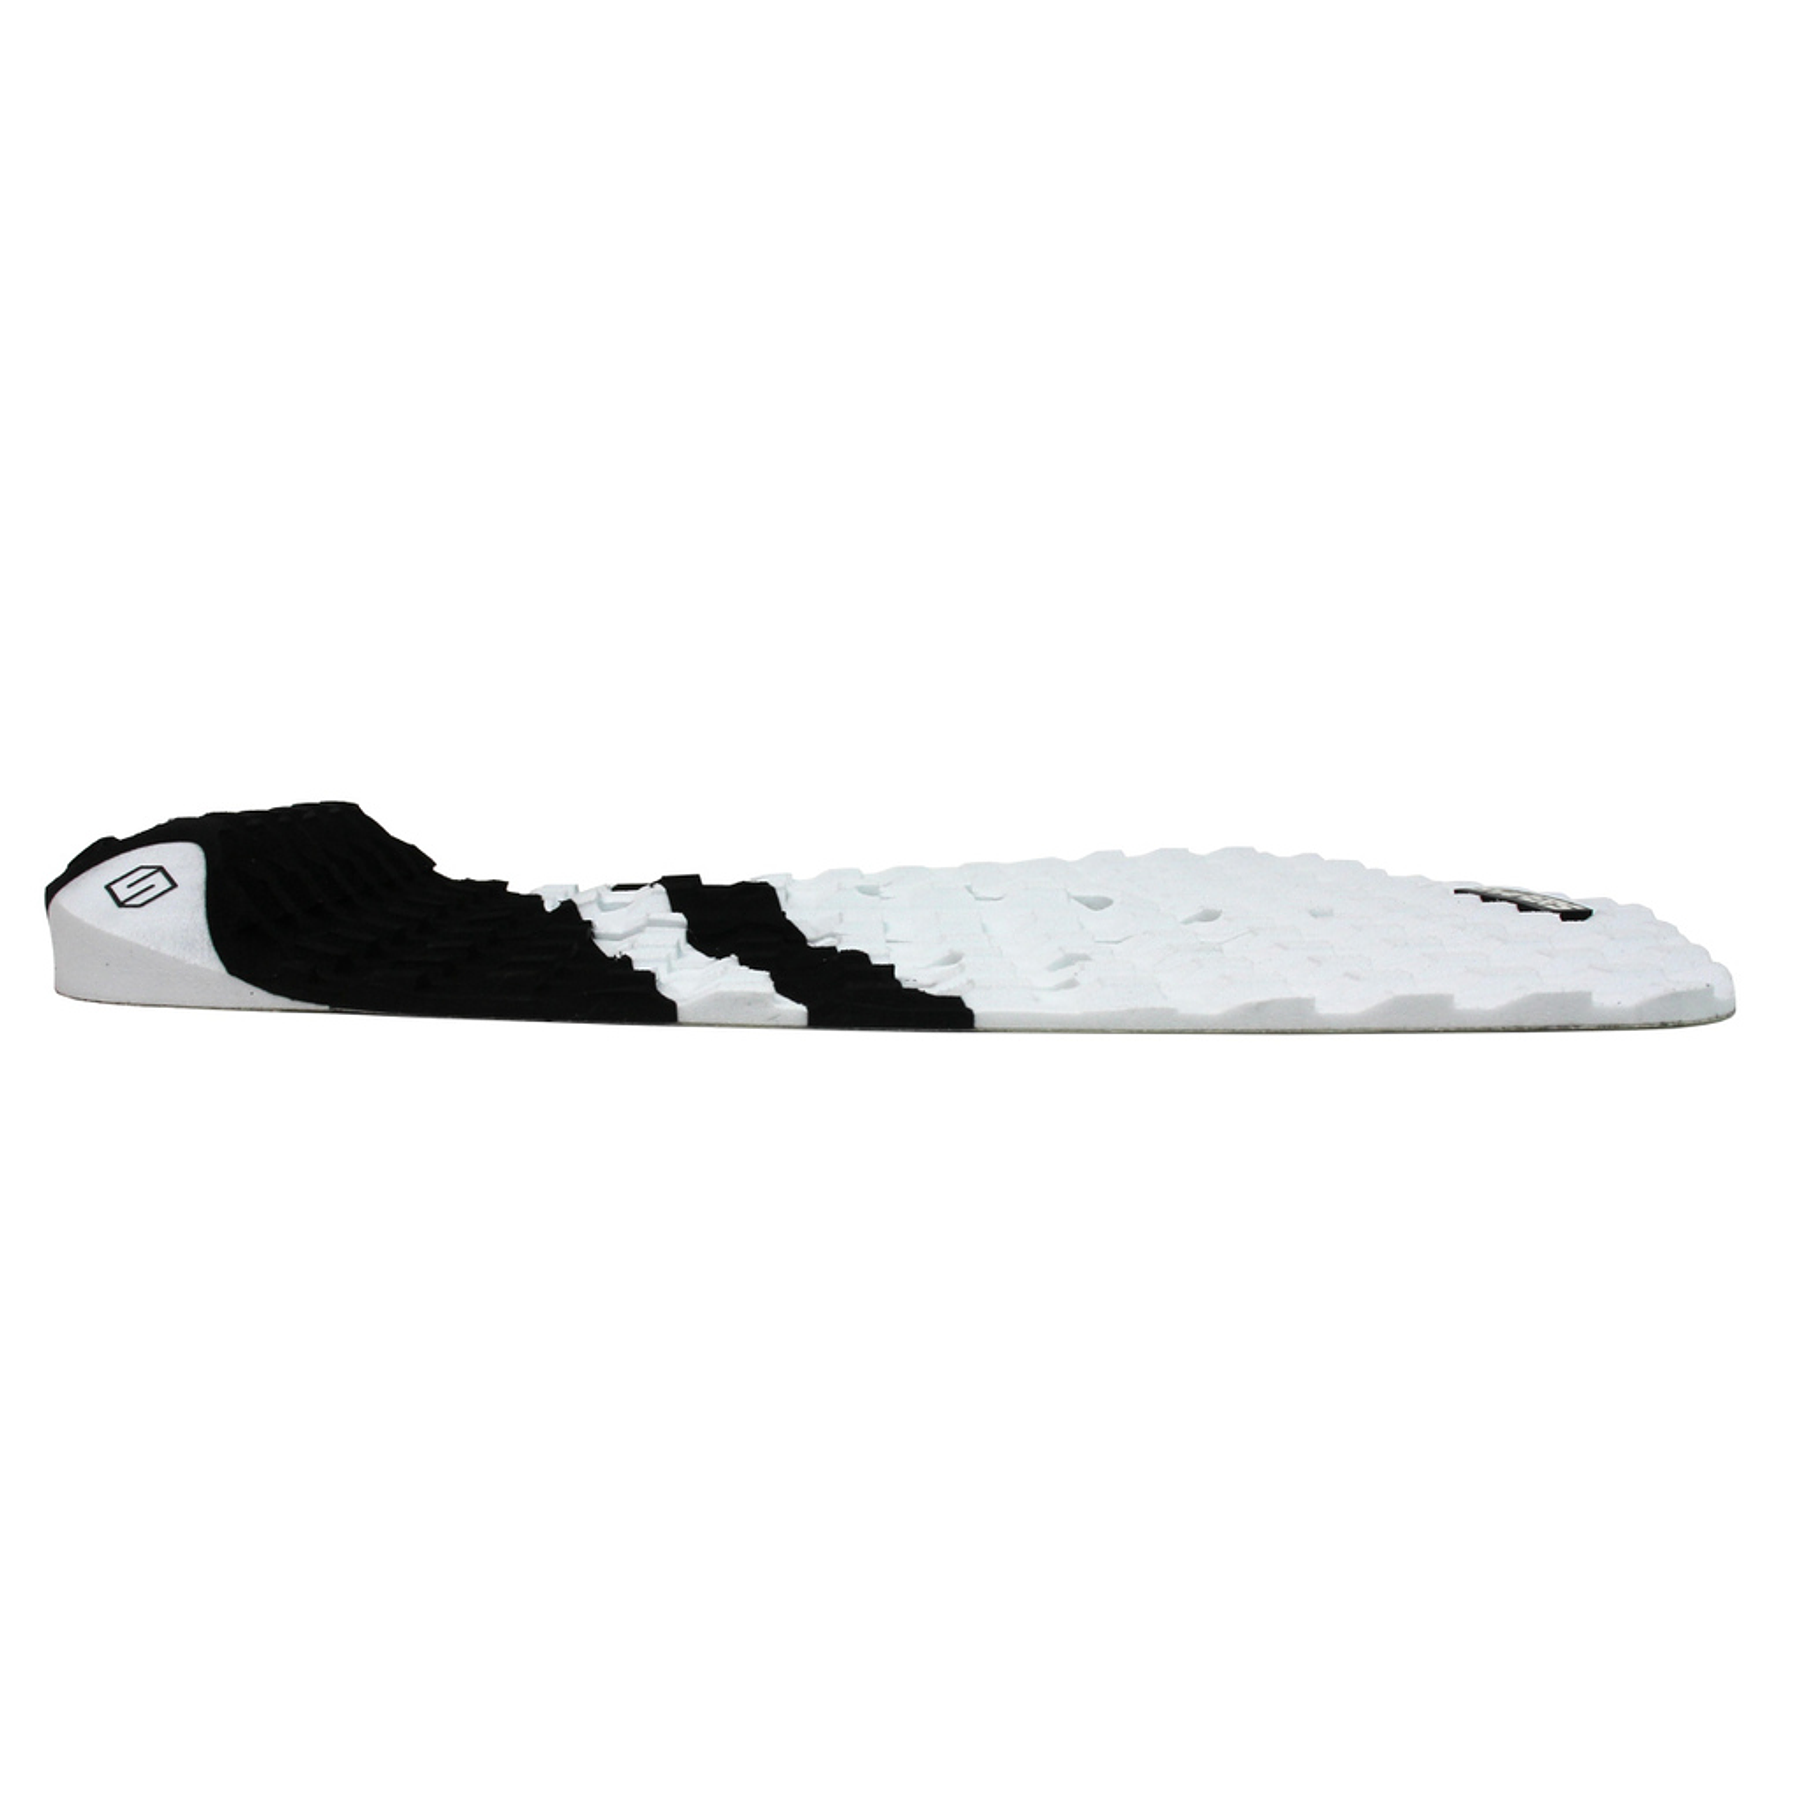 Deck Shapers Hybrid -- White/Black